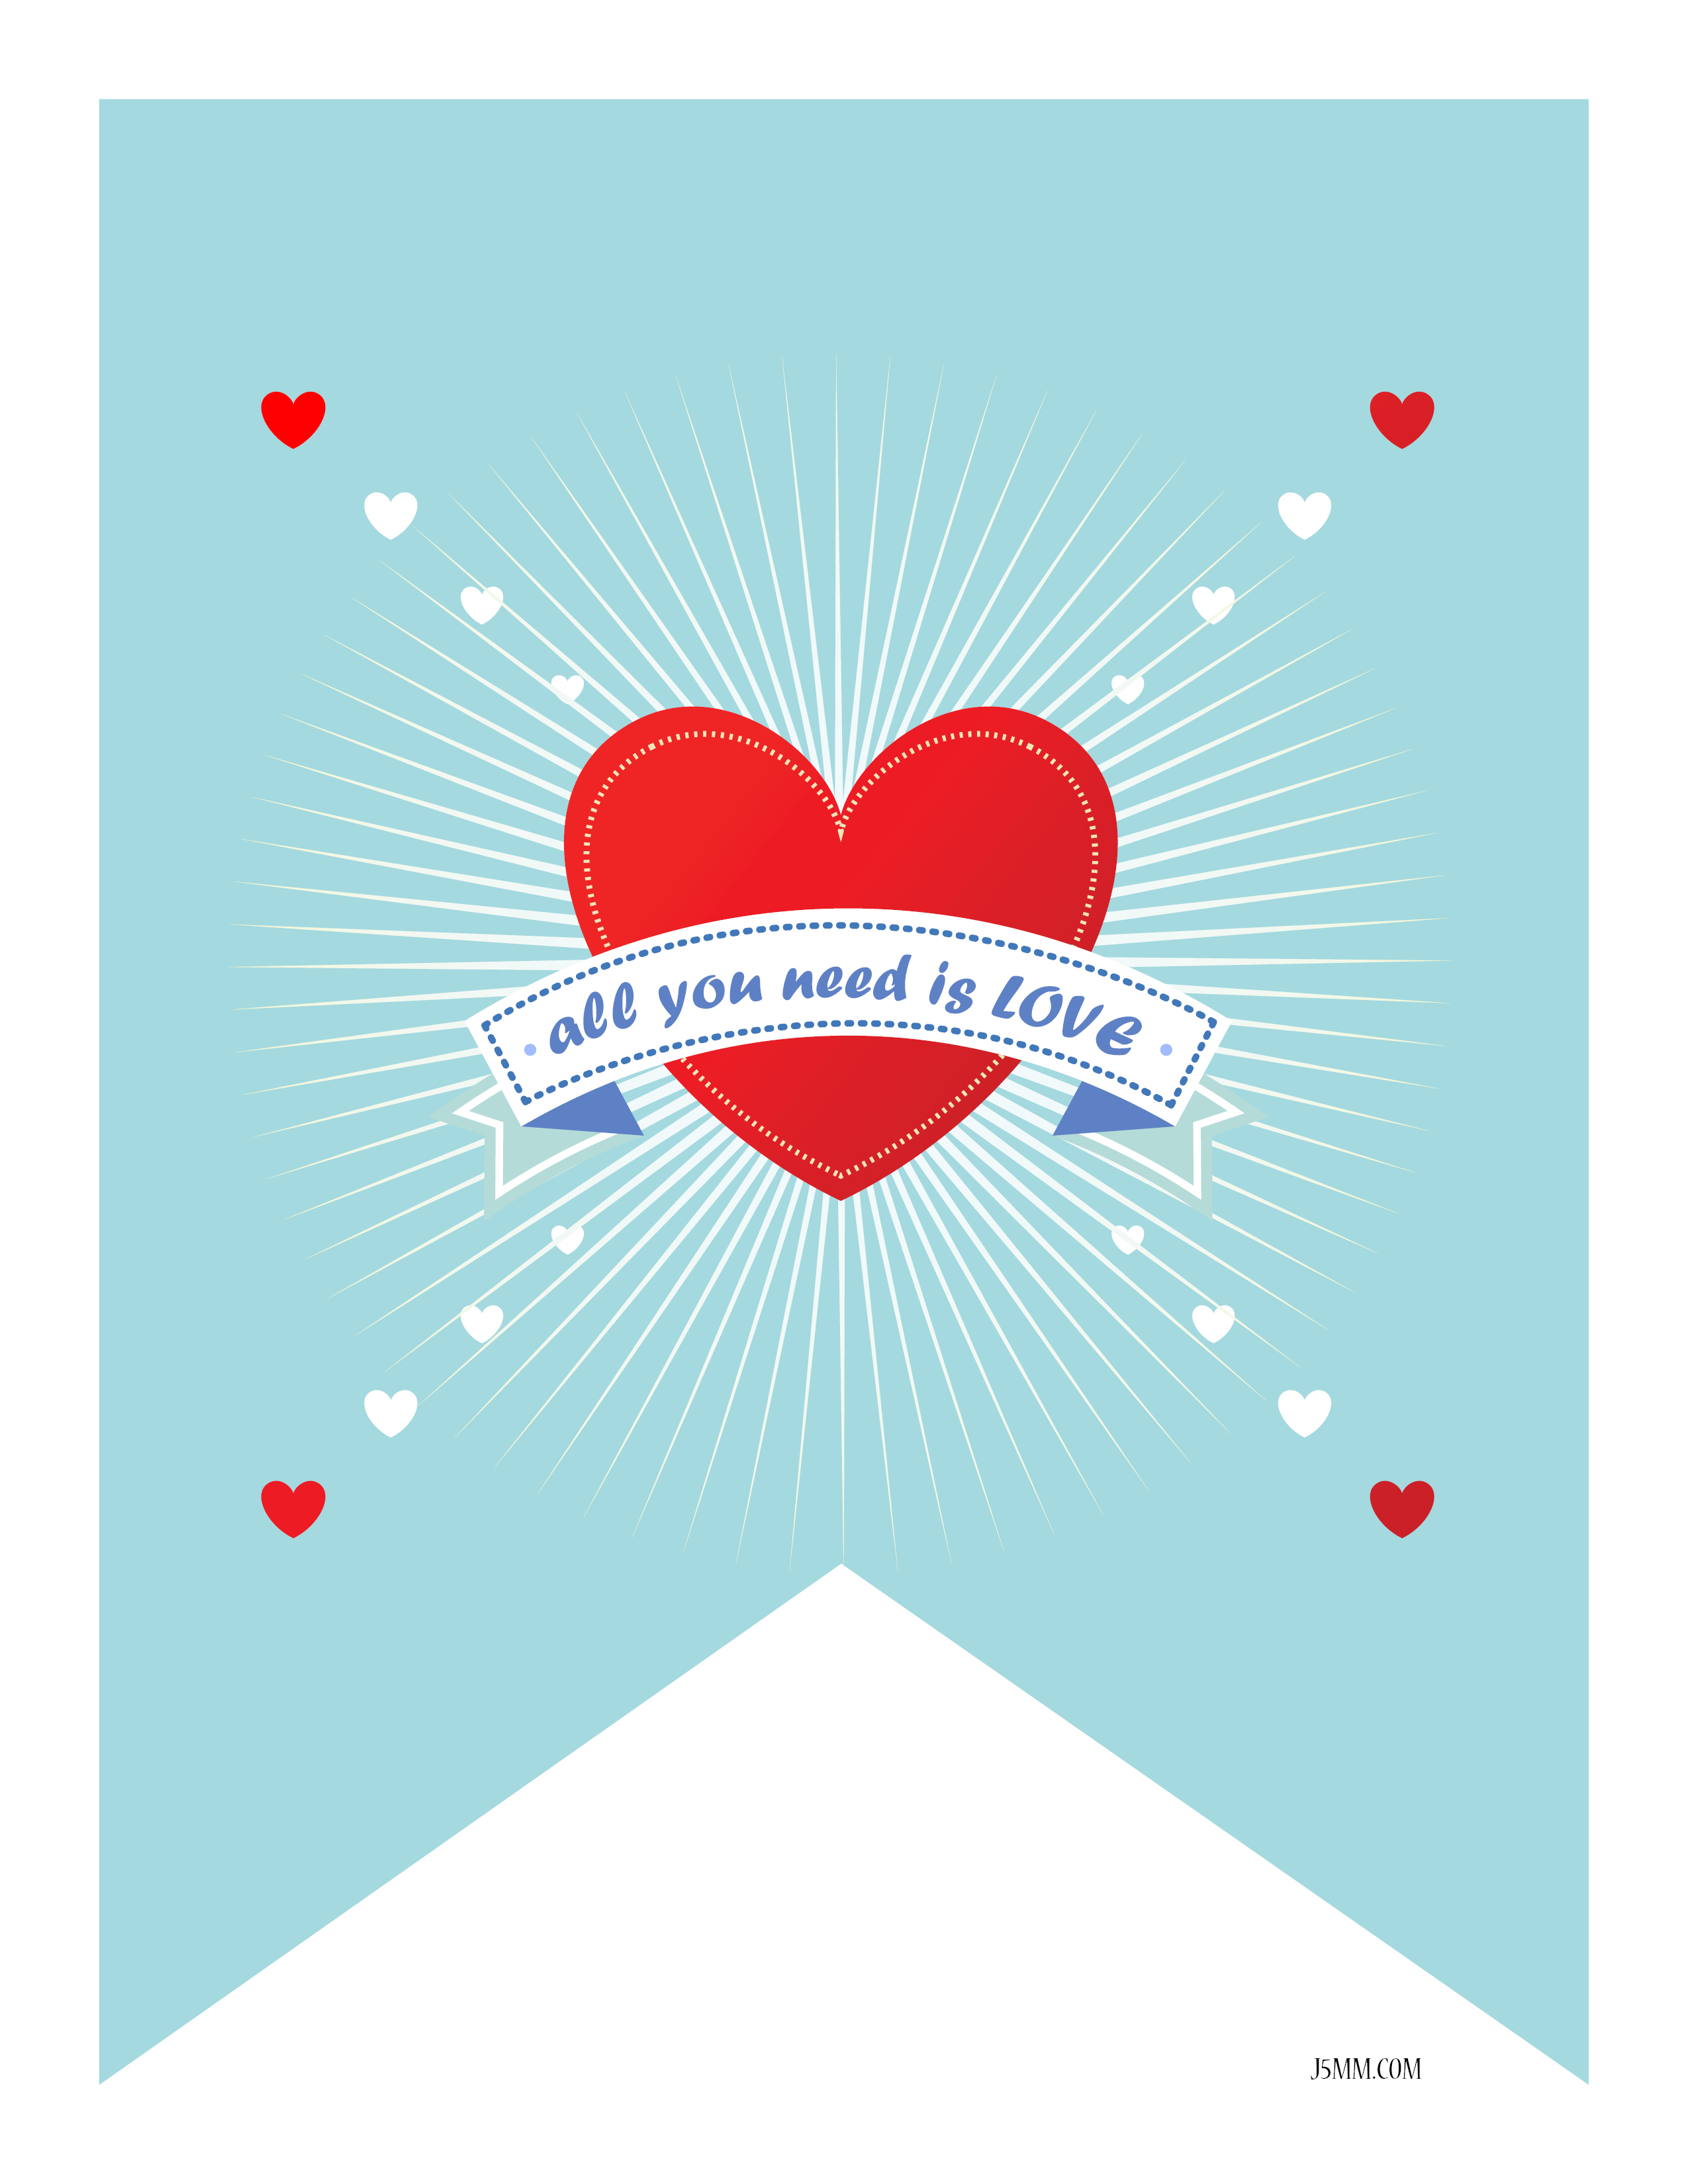 All You Need Is Love // Valentines Day RV Decor via J5MM.com